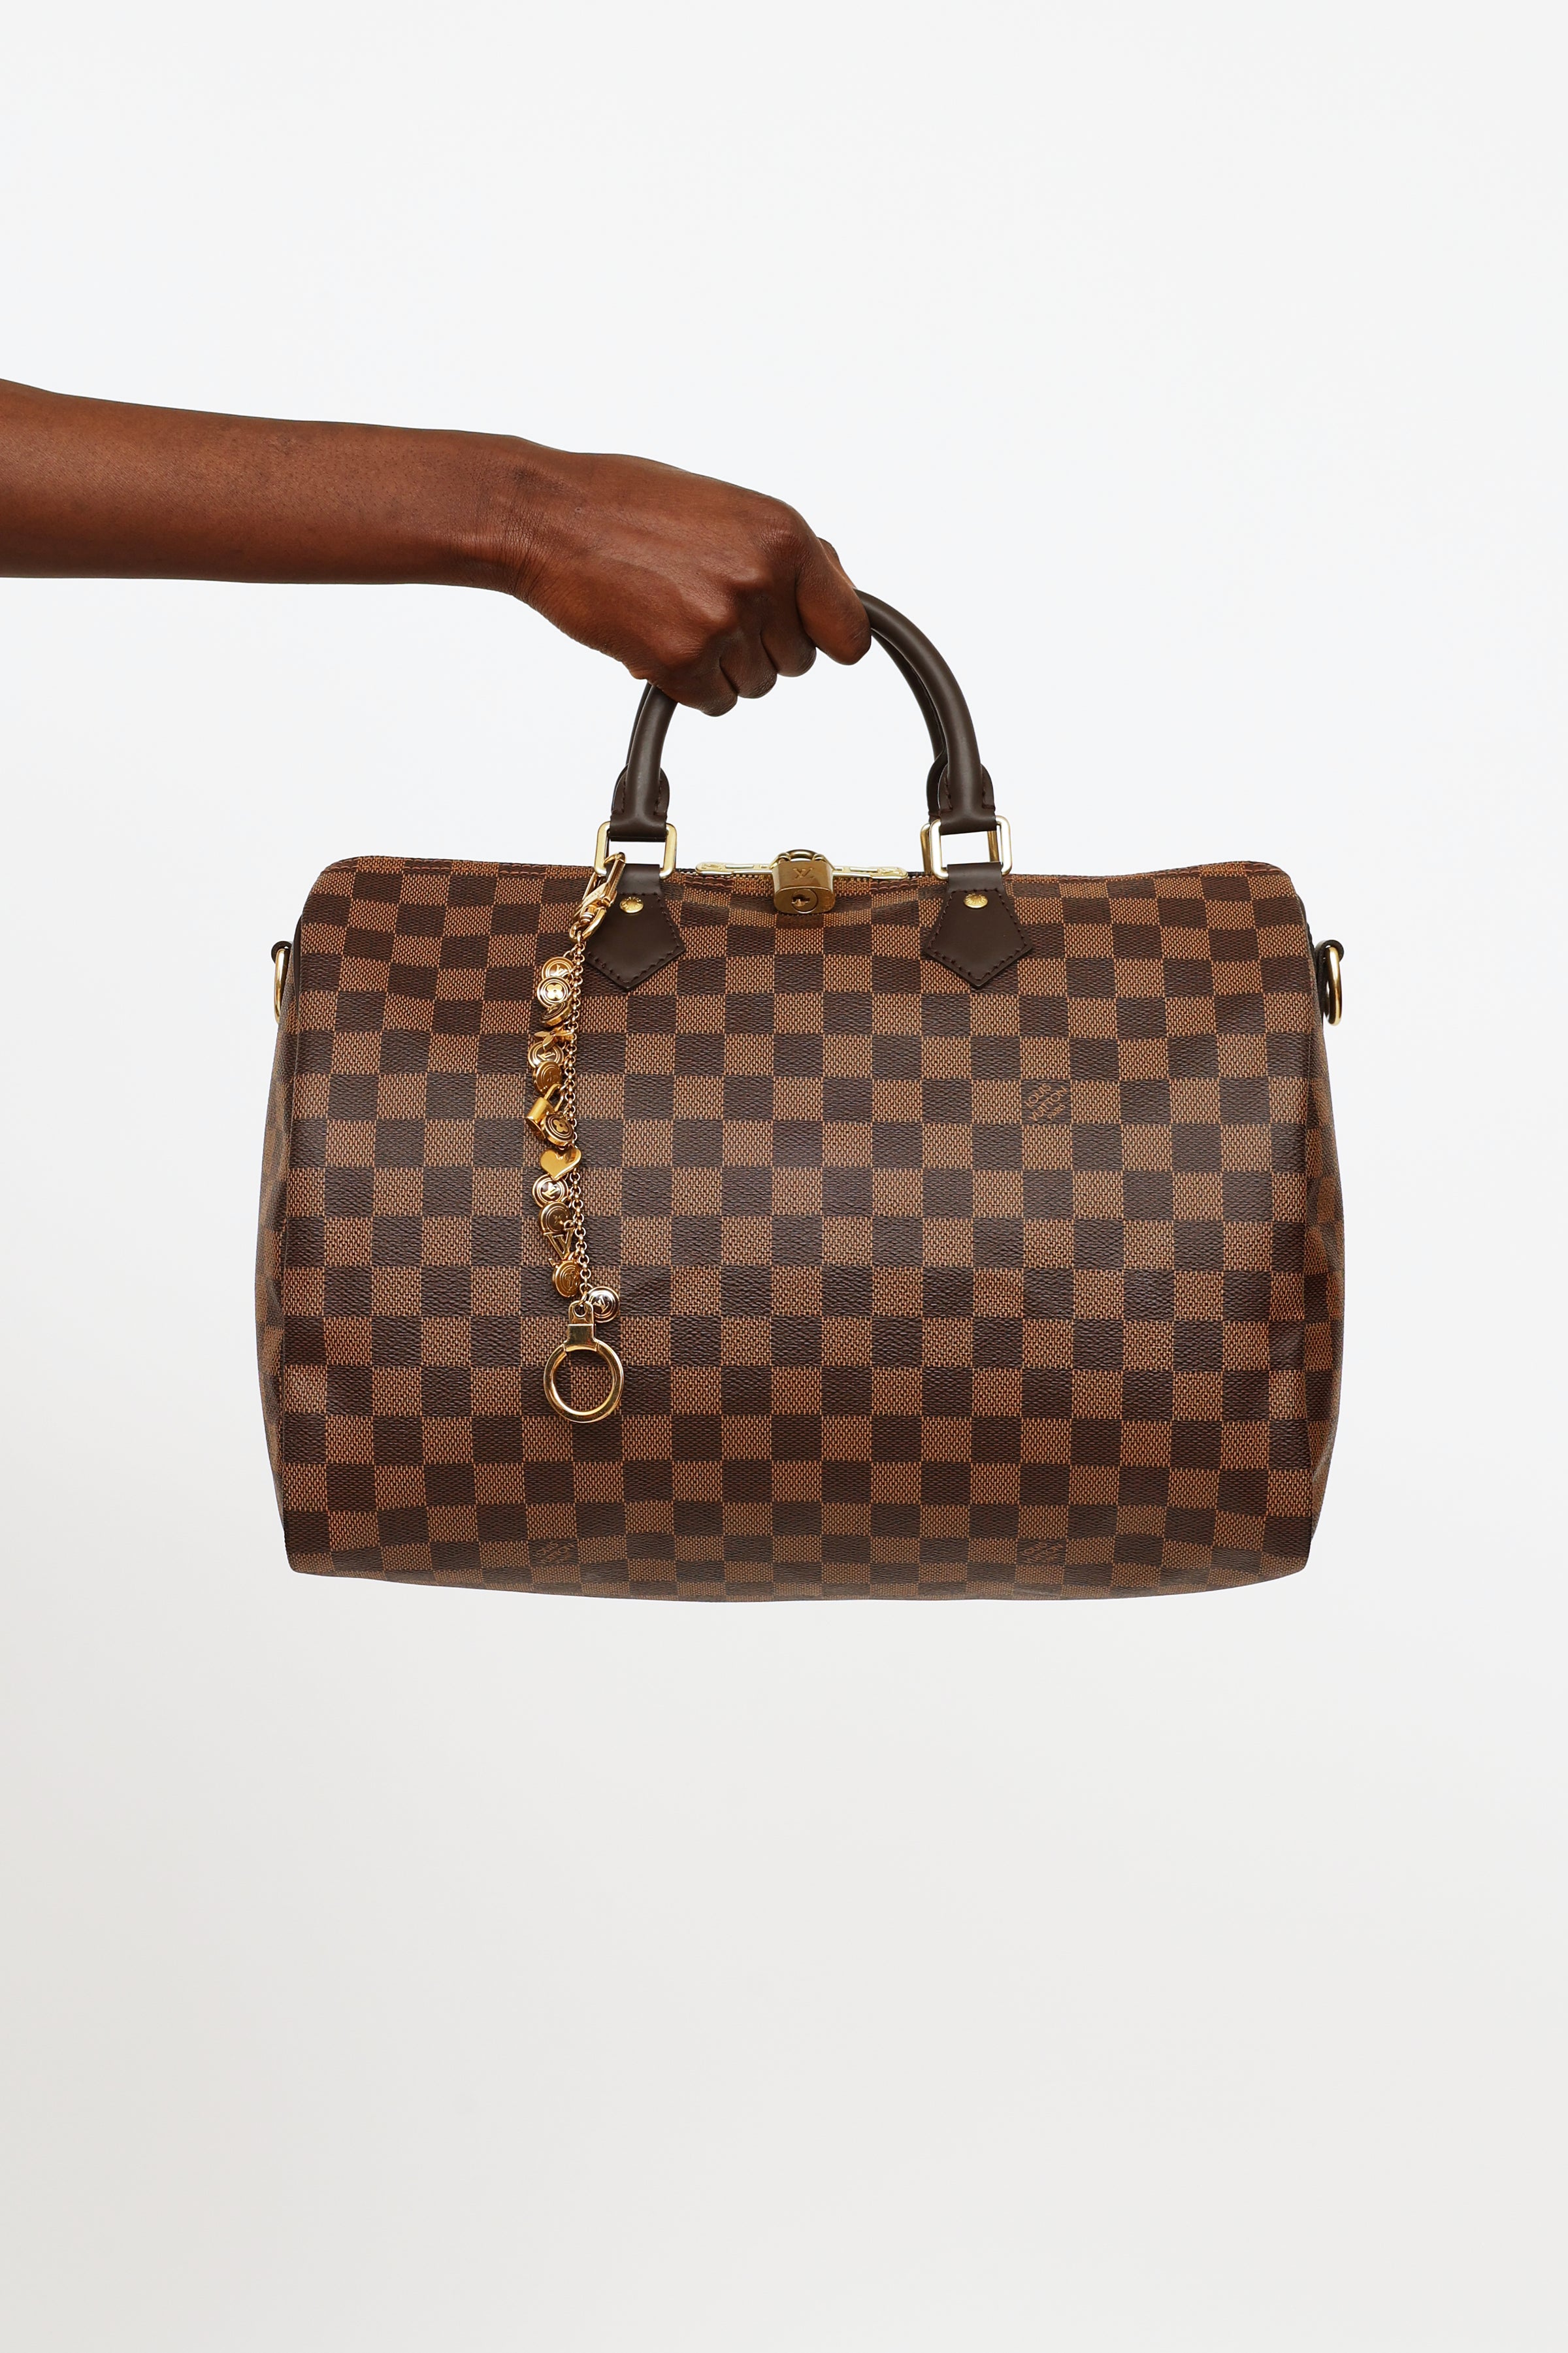 Louis Vuitton Speedy Monogram Bag Charm